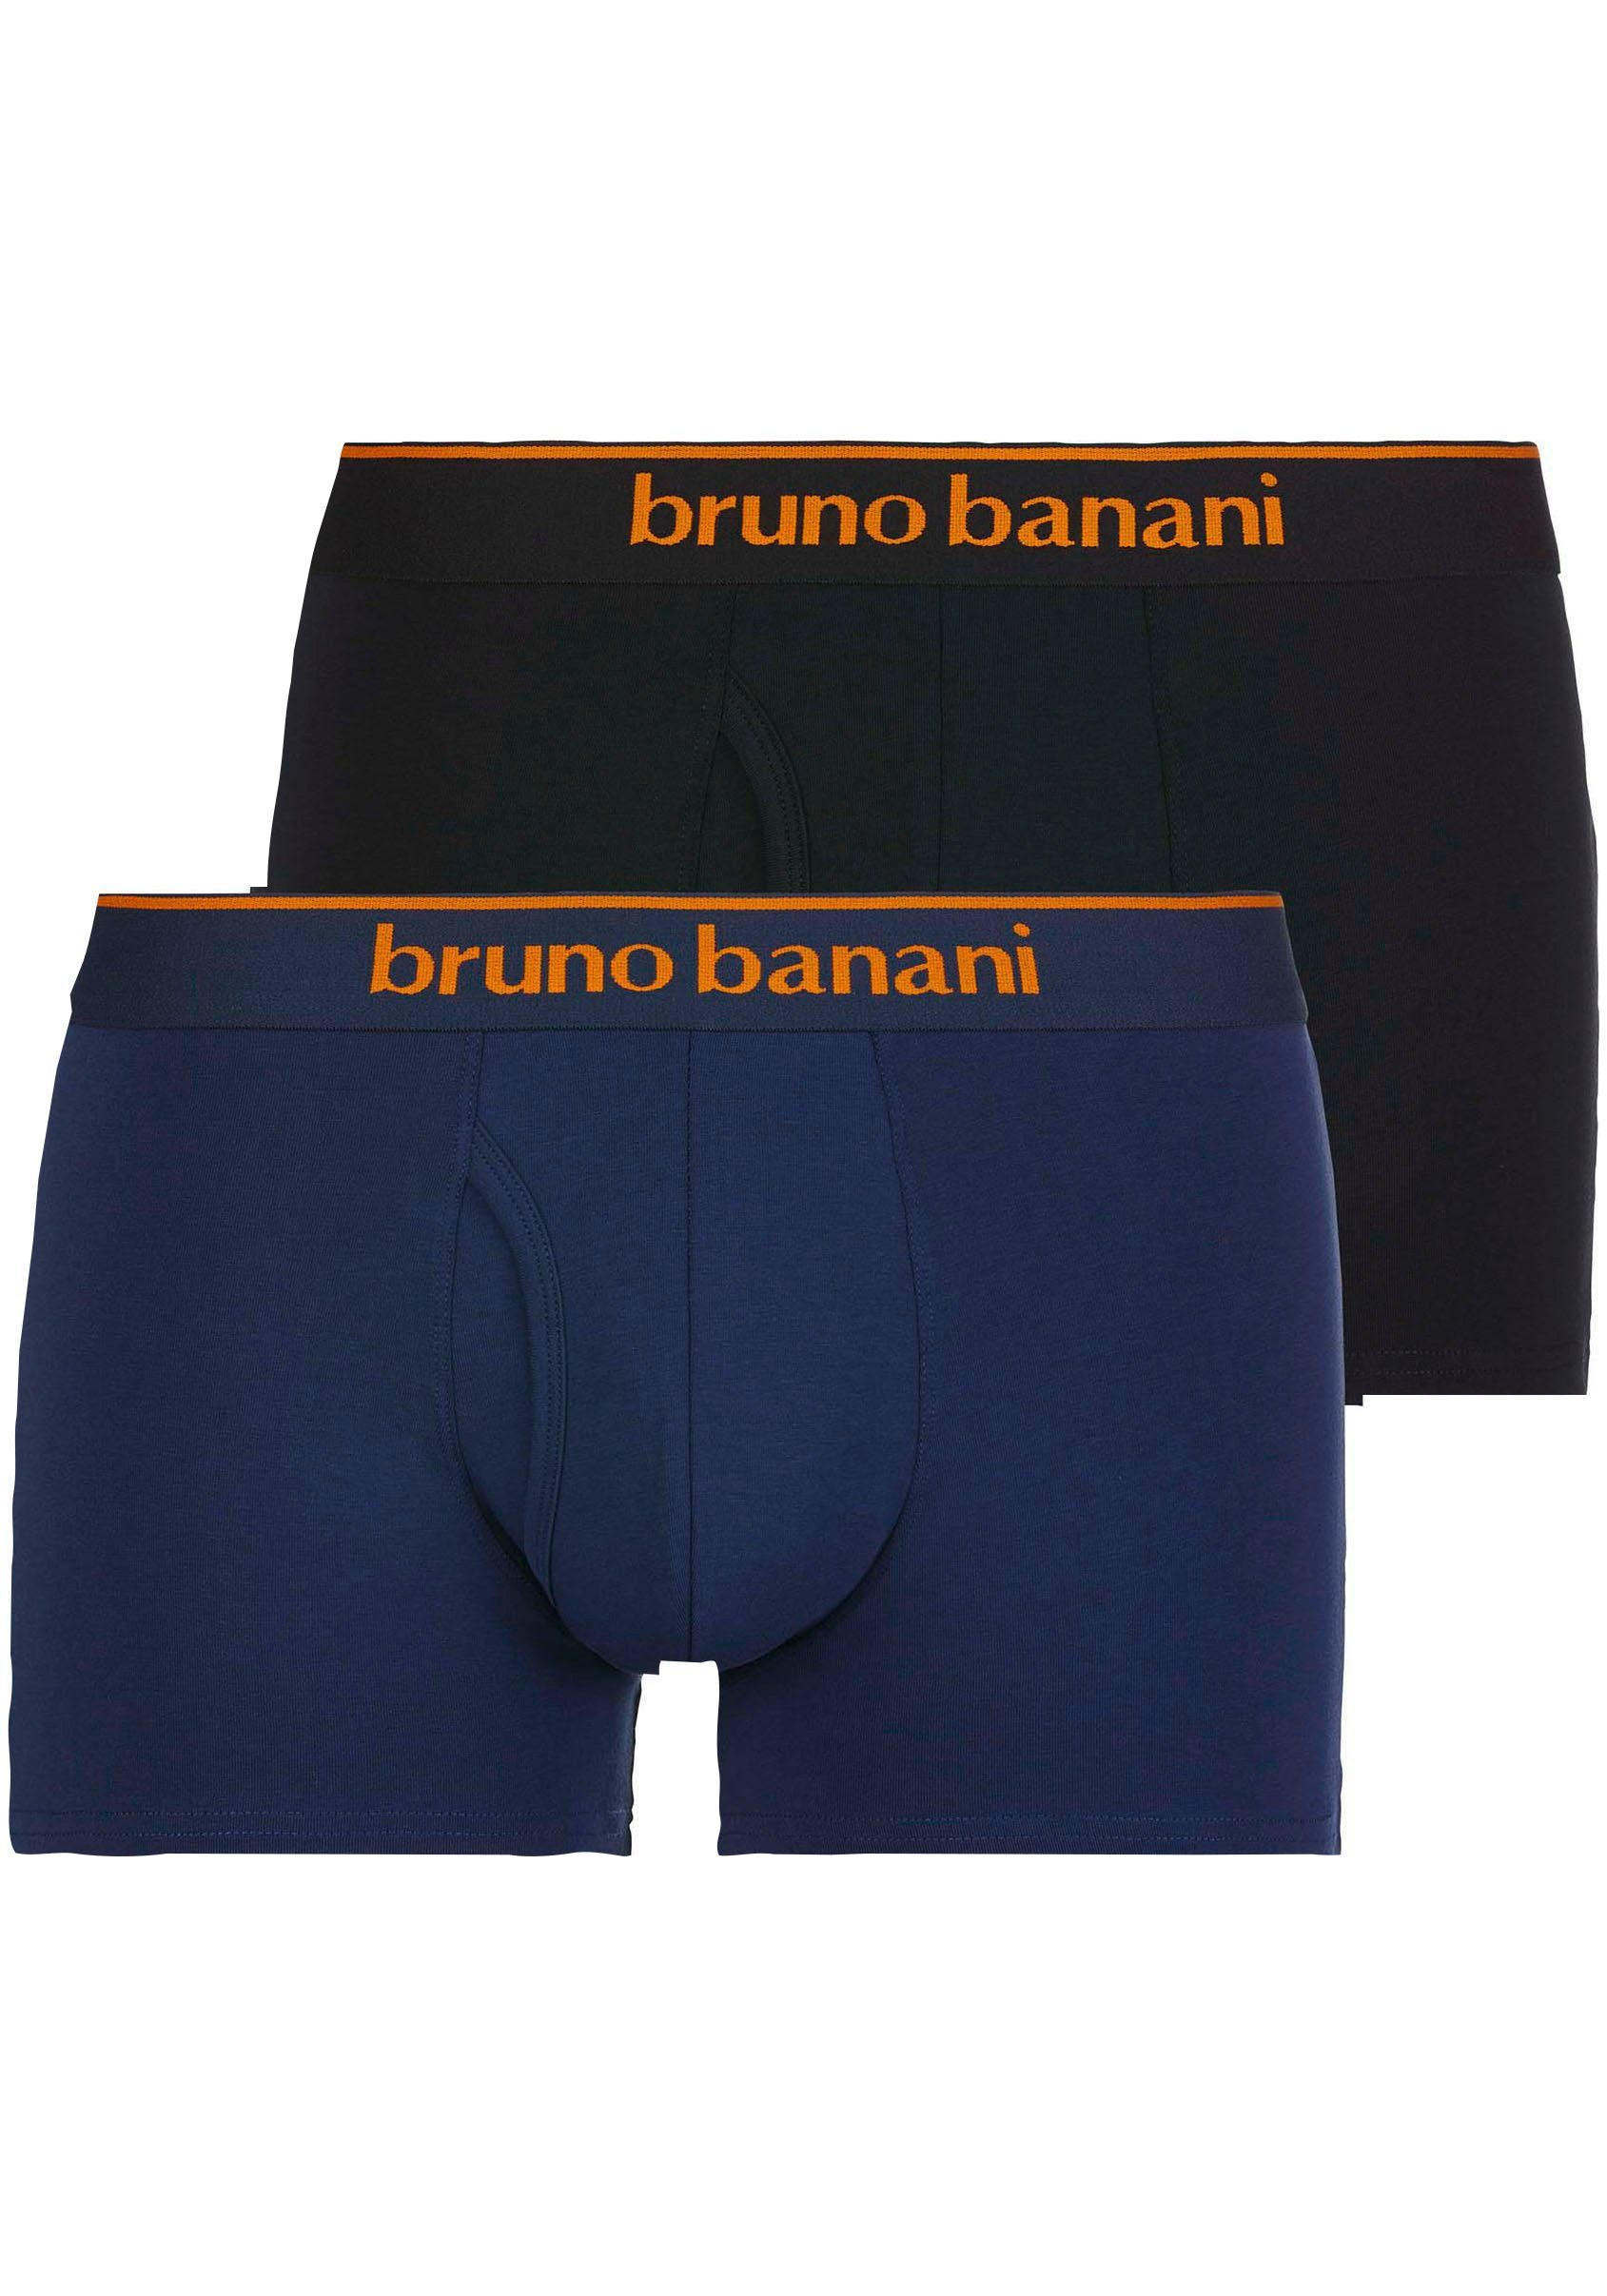 Bruno Banani Boxershorts Short 2Pack Quick Access (Packung, 2-St) Kontrastfarbene Details blau-schwarz